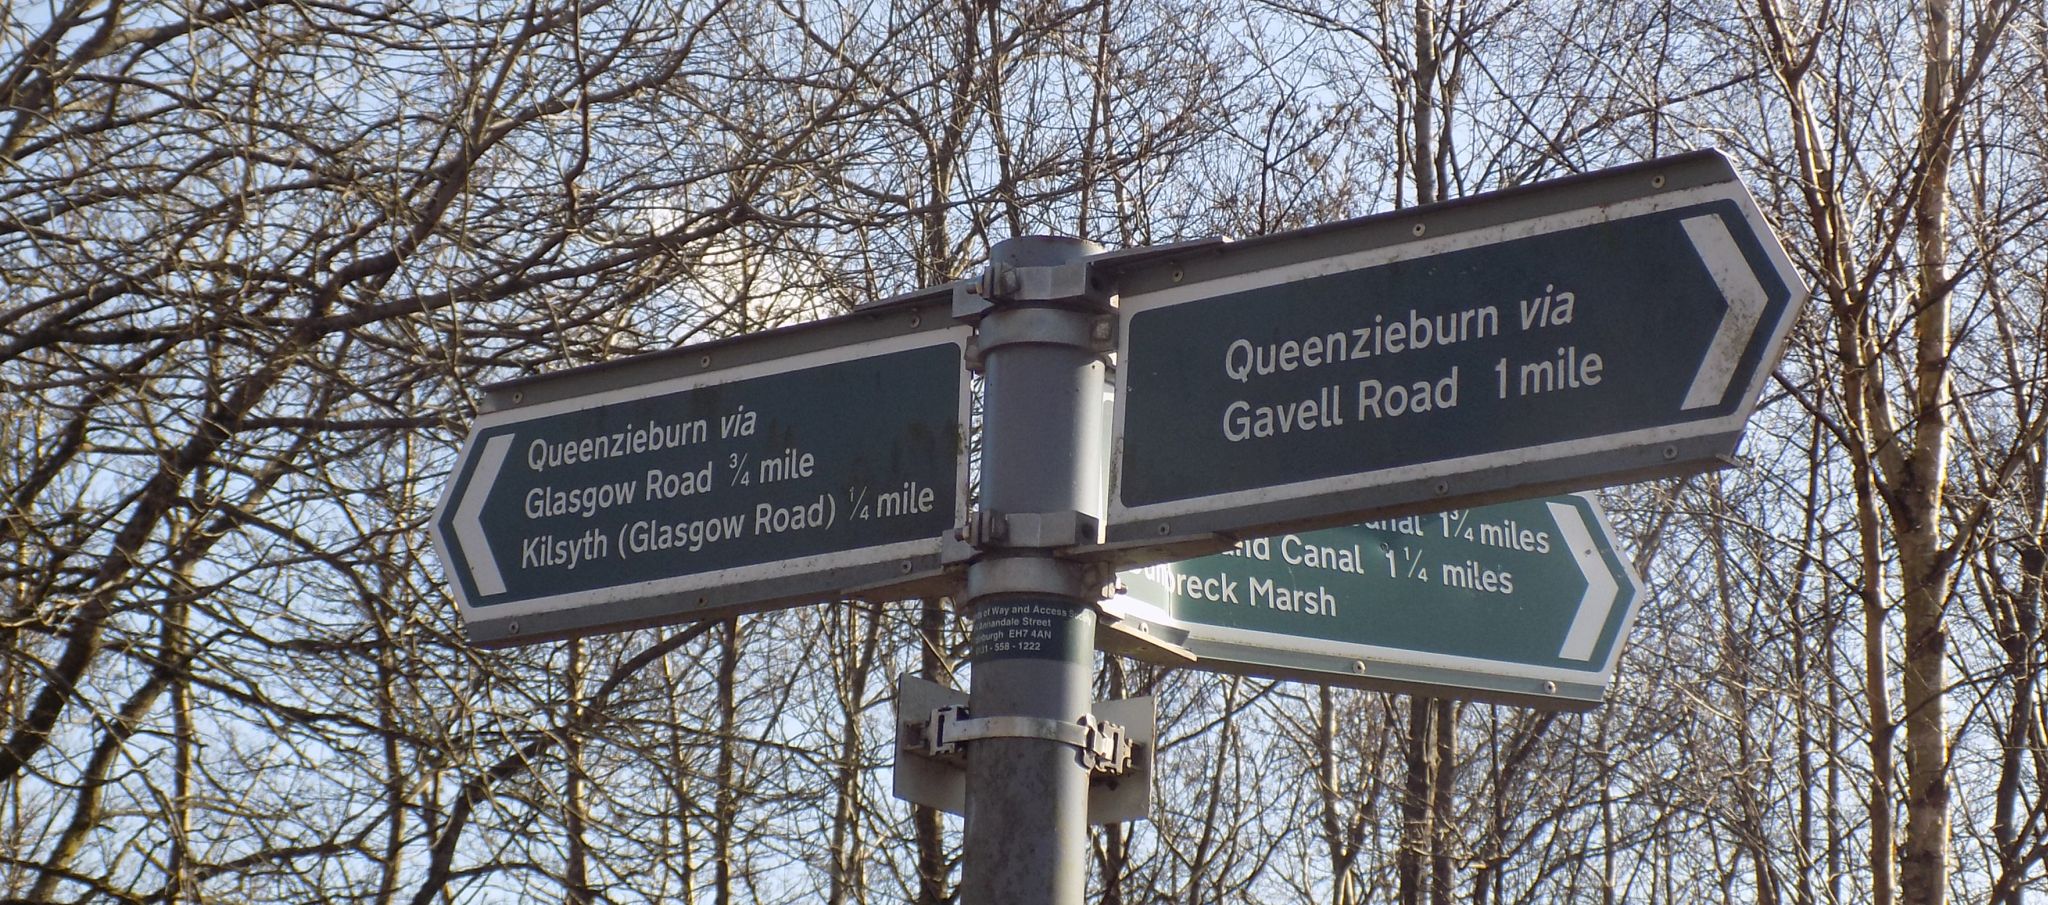 Signpost at Dumbreck Marsh on Gavell Road